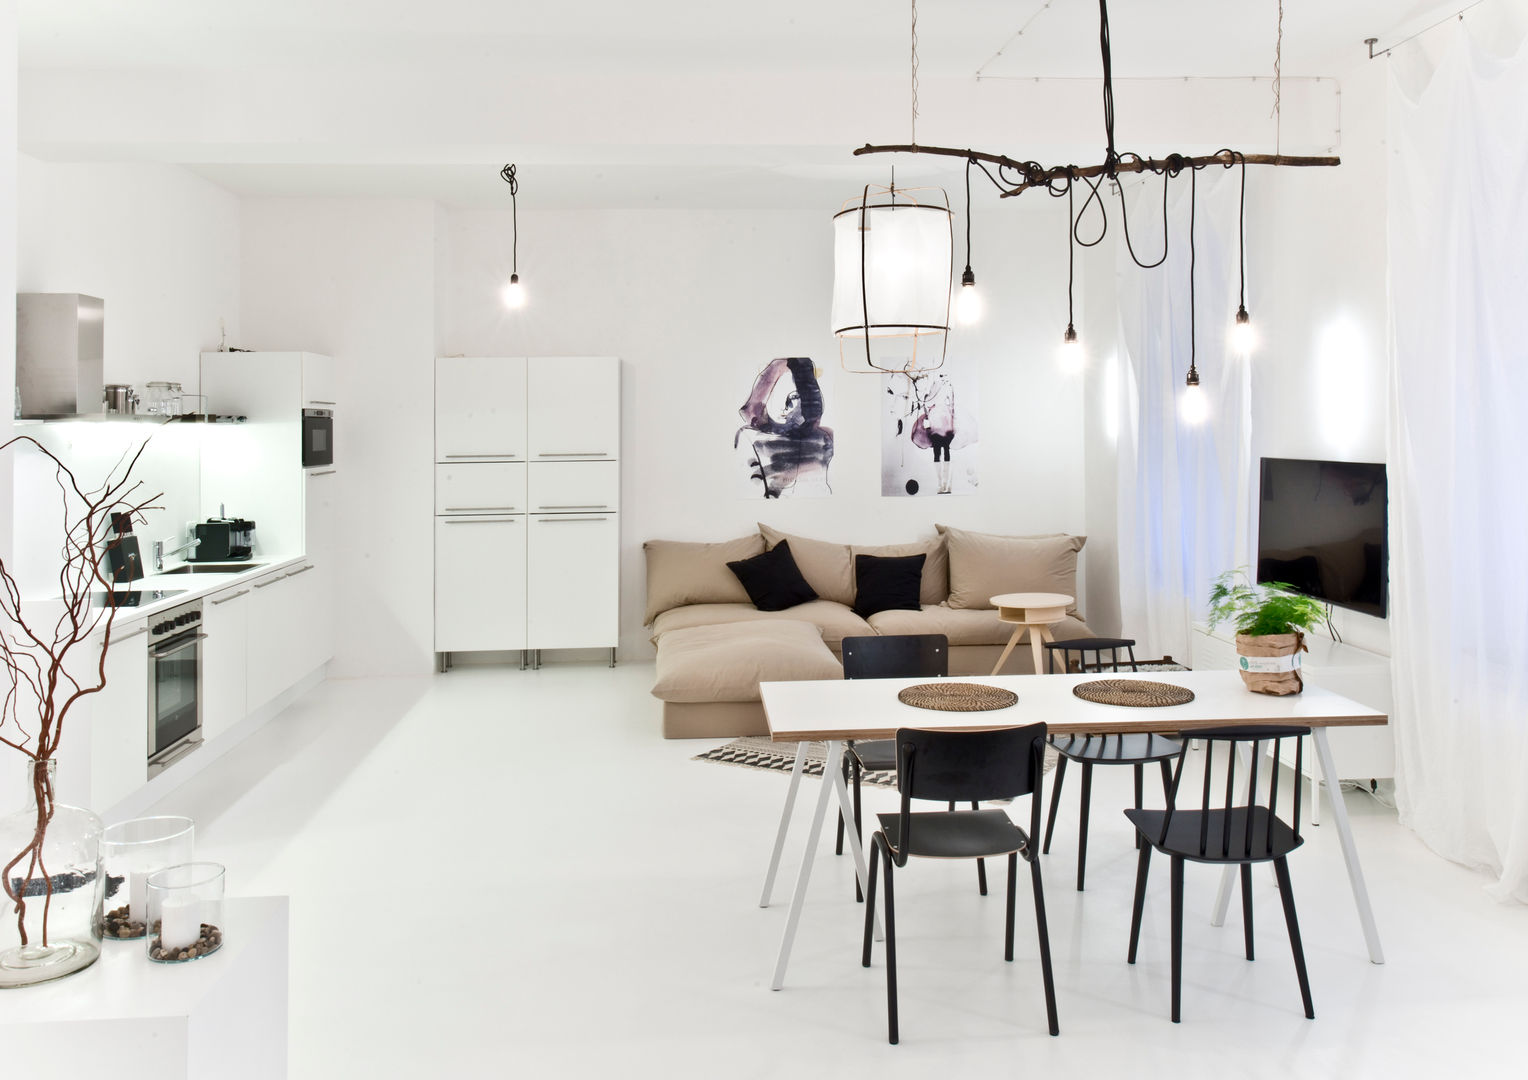 70 qm Loft, freudenspiel - Interior Design freudenspiel - Interior Design Living room